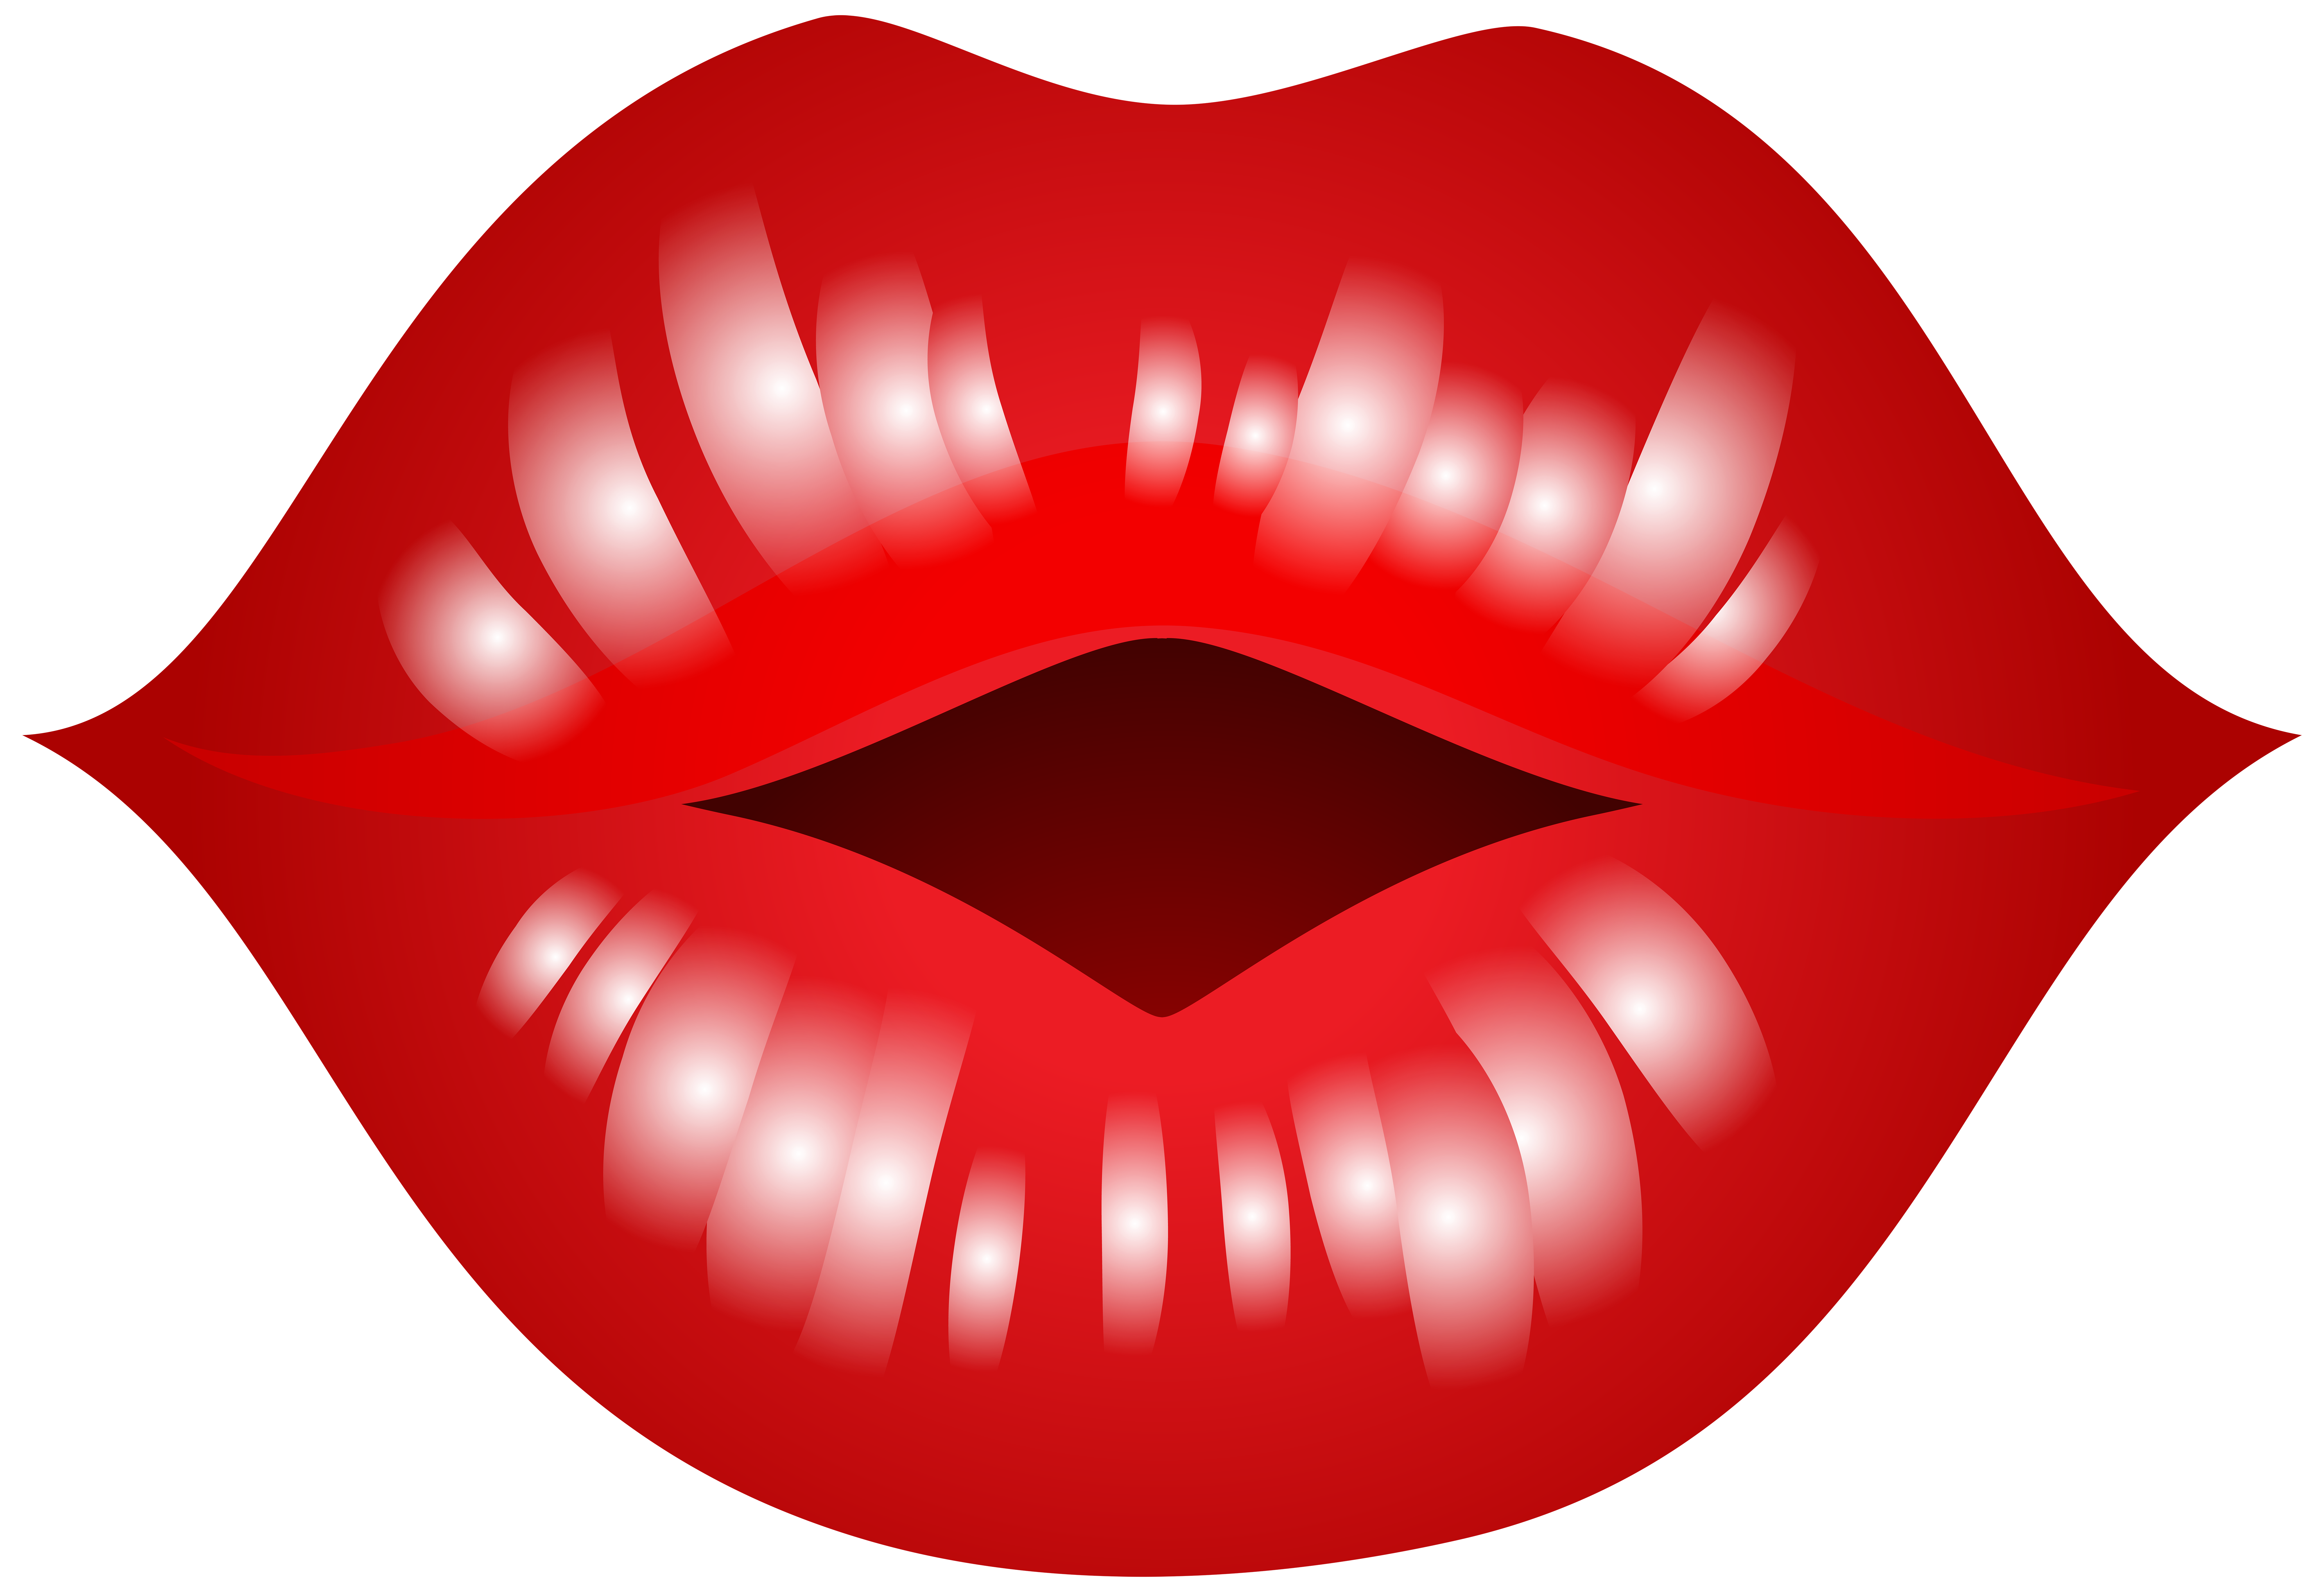 Kiss lips image clip art 7 days